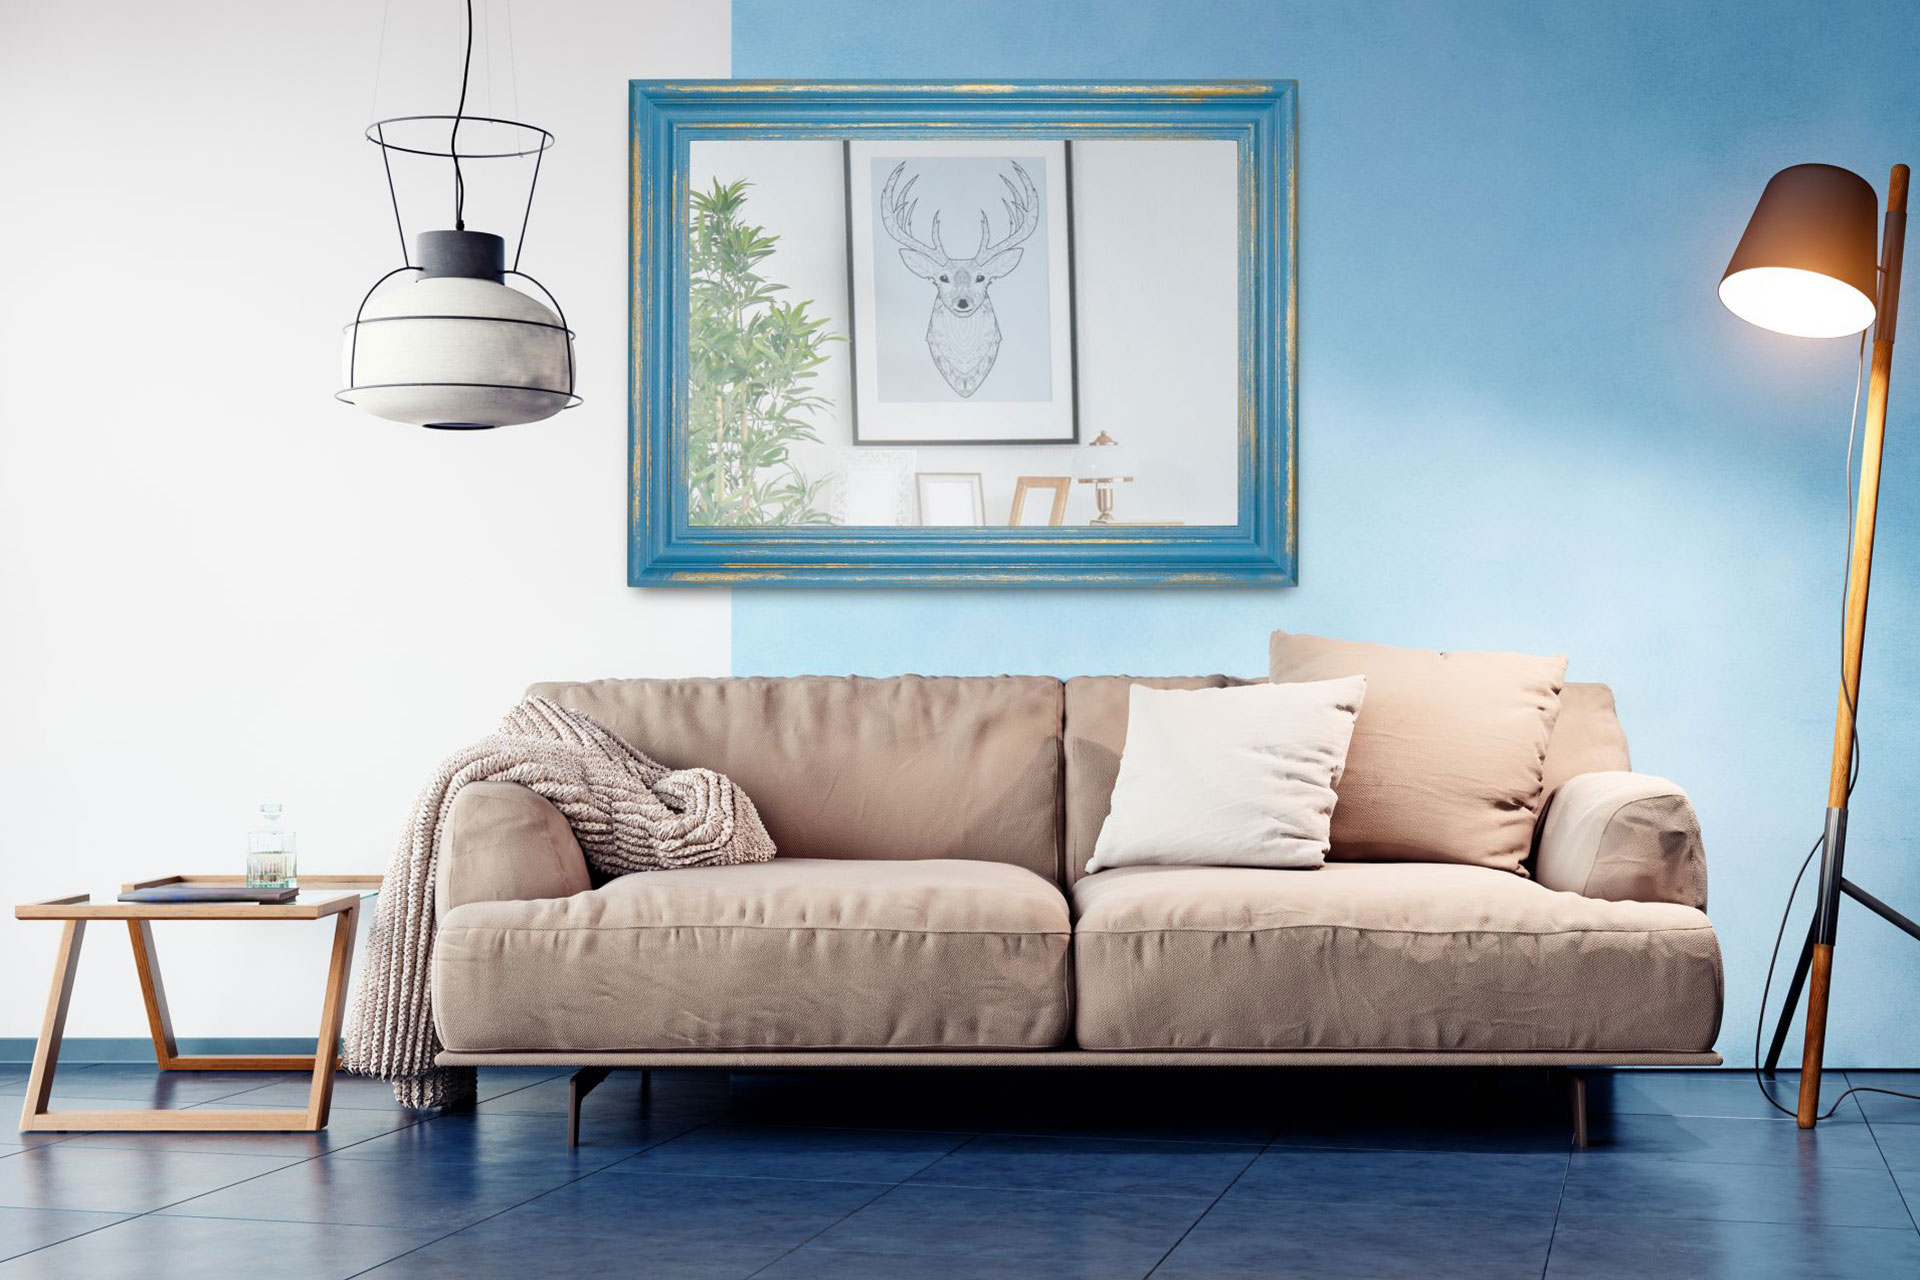 Wandspiegel Modell Le Havre, Gold/Hellblau Form: rechteckig Herstellung: by ASR-Rahmendesign Material: Holz, Wandspiegel, Shabby-Chic, Ansicht Innenbereich, an der Wand